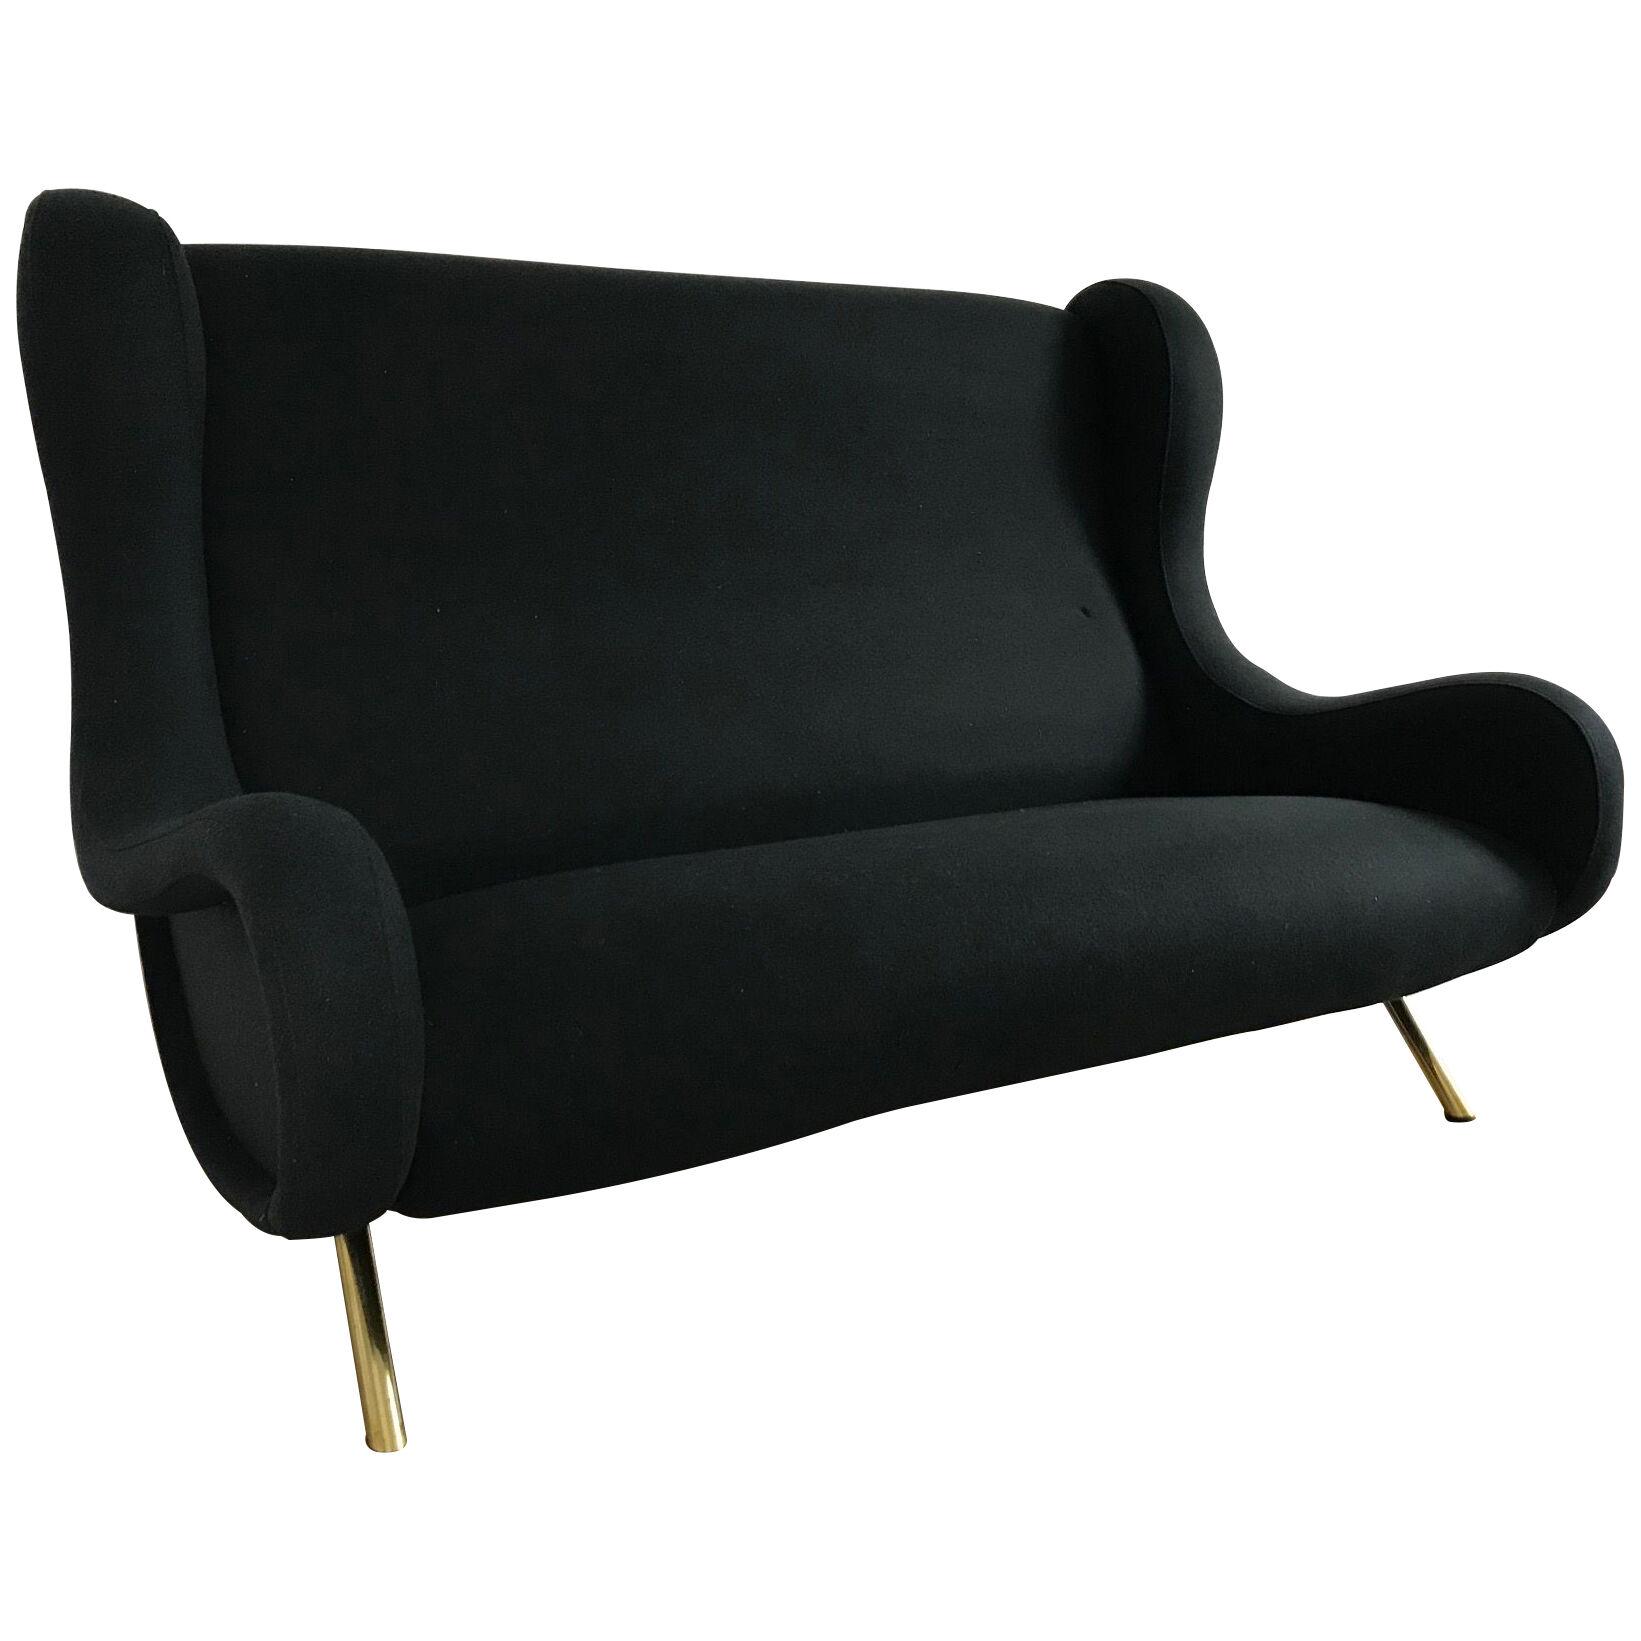 Senior "Sofa" by Marco Zanuso for Arflex